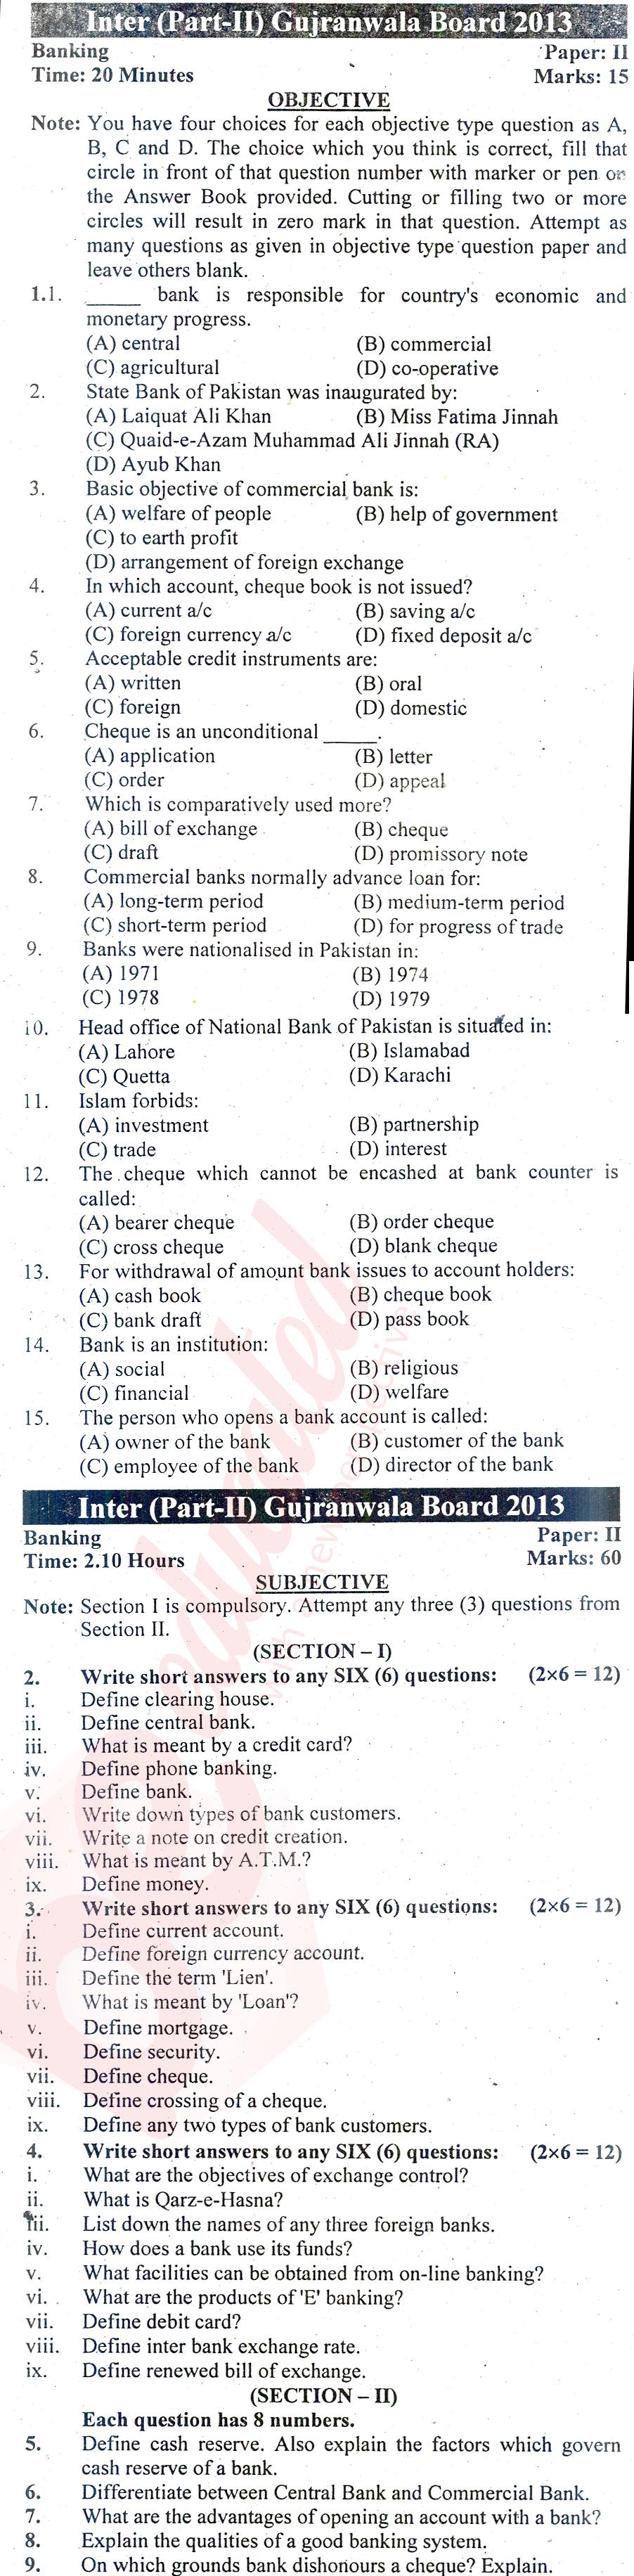 Principles of Banking ICOM Part 2 Past Paper Group 1 BISE Gujranwala 2013